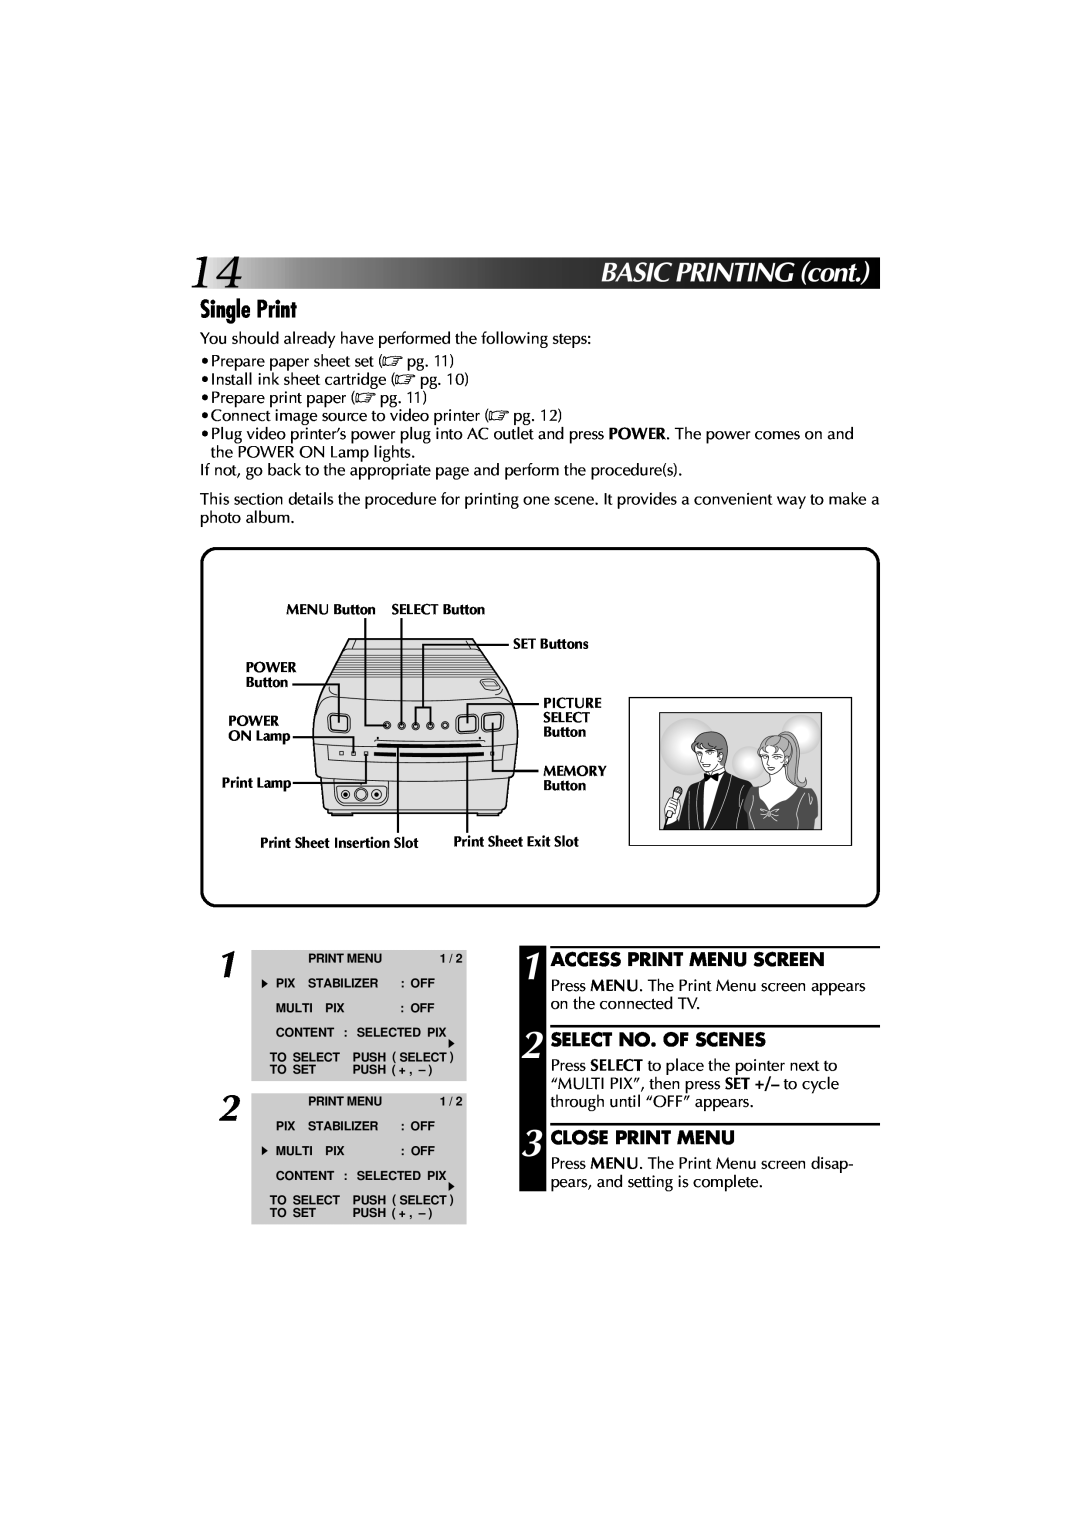 JVC GV-PT1 manual 14BASICPRINTINGcont, Single Print, Select No. Of Scenes, Close Print Menu 